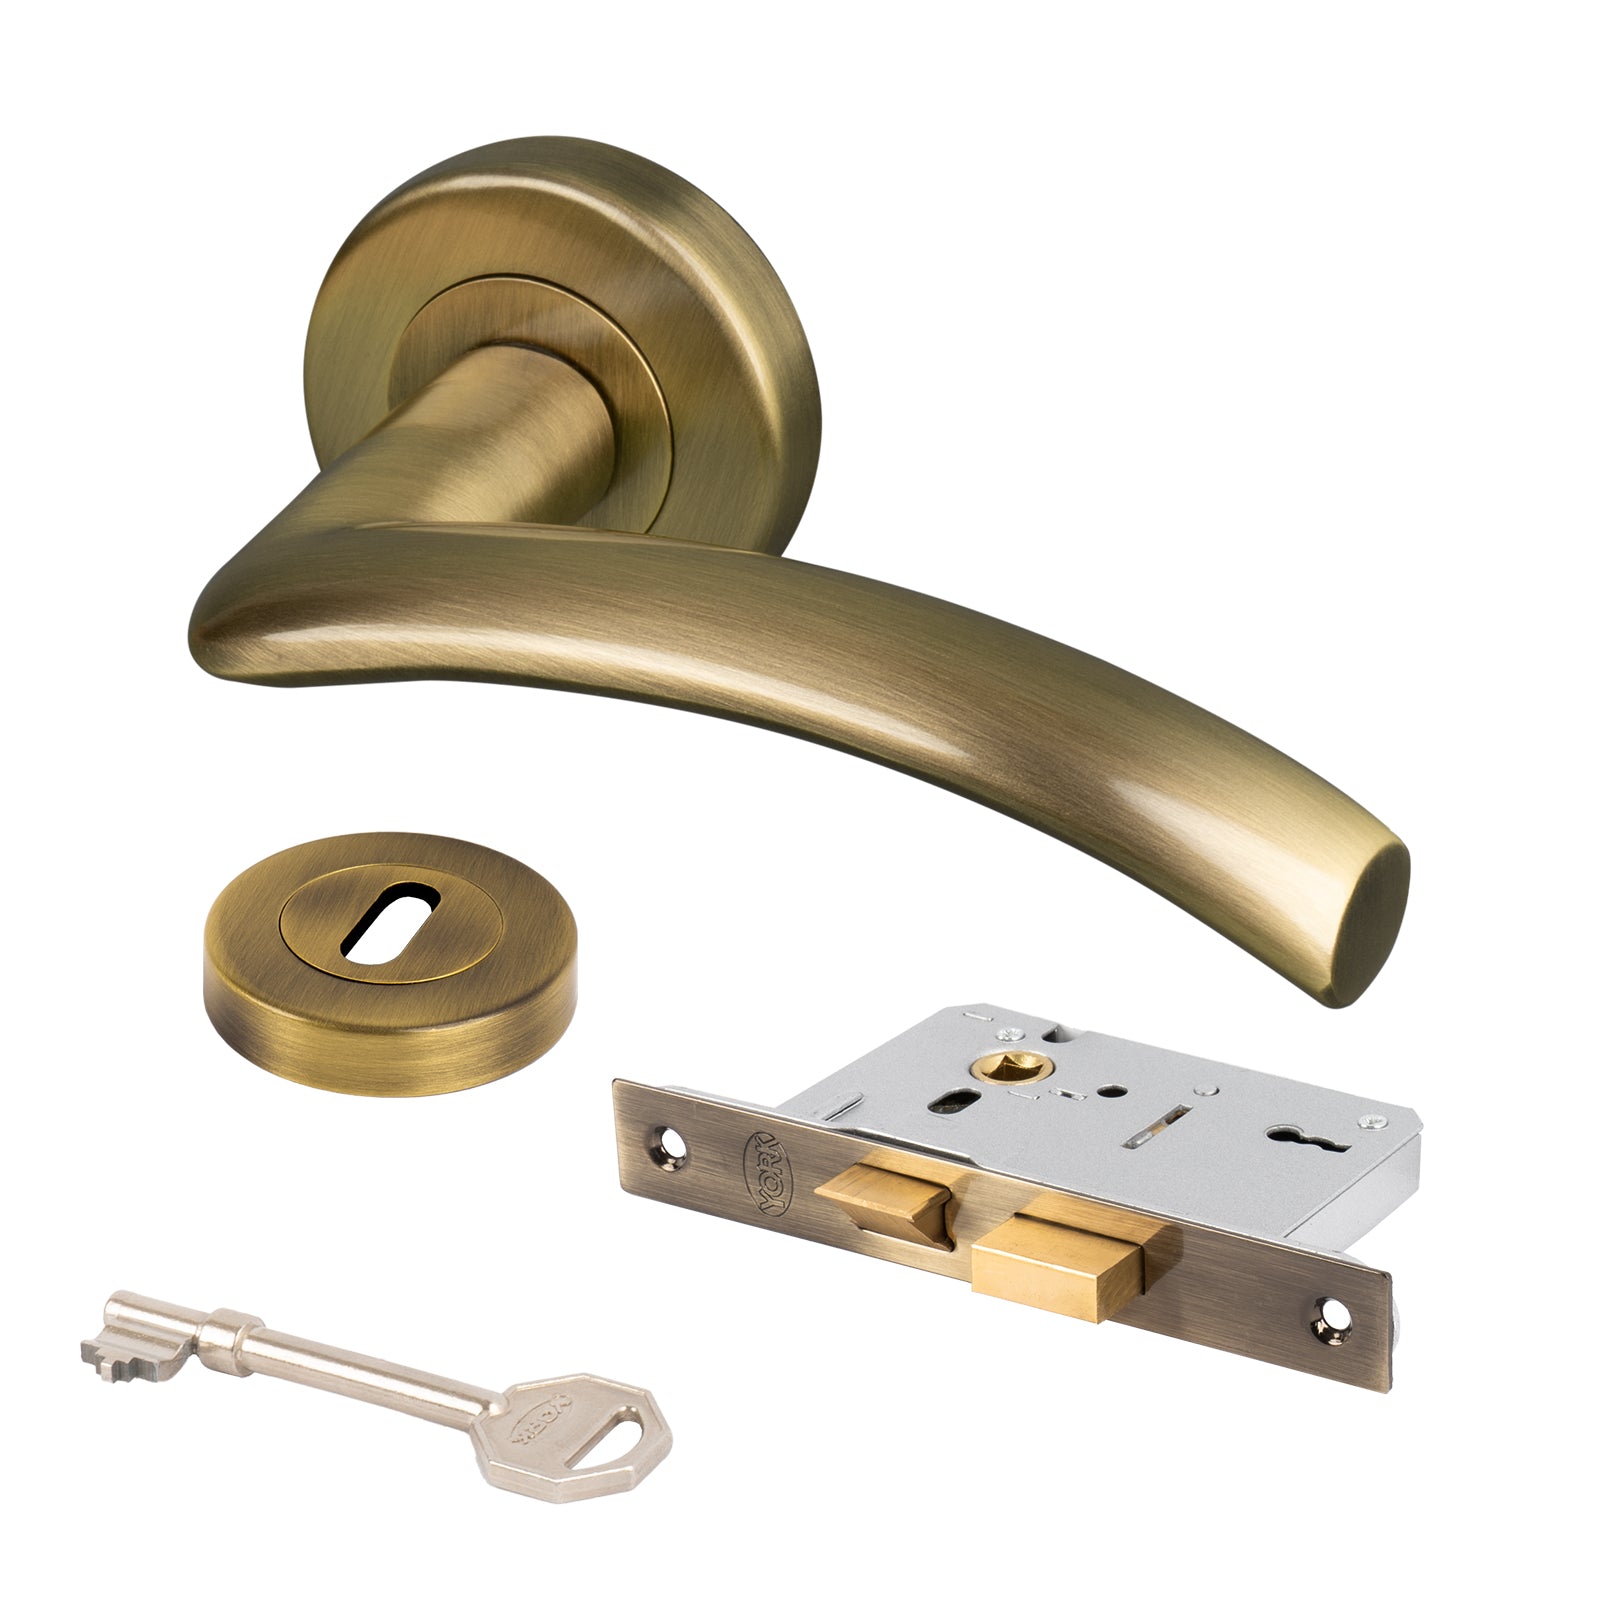 aged brass Centaur round rose handles, 3 lever lock set, keyhole cover